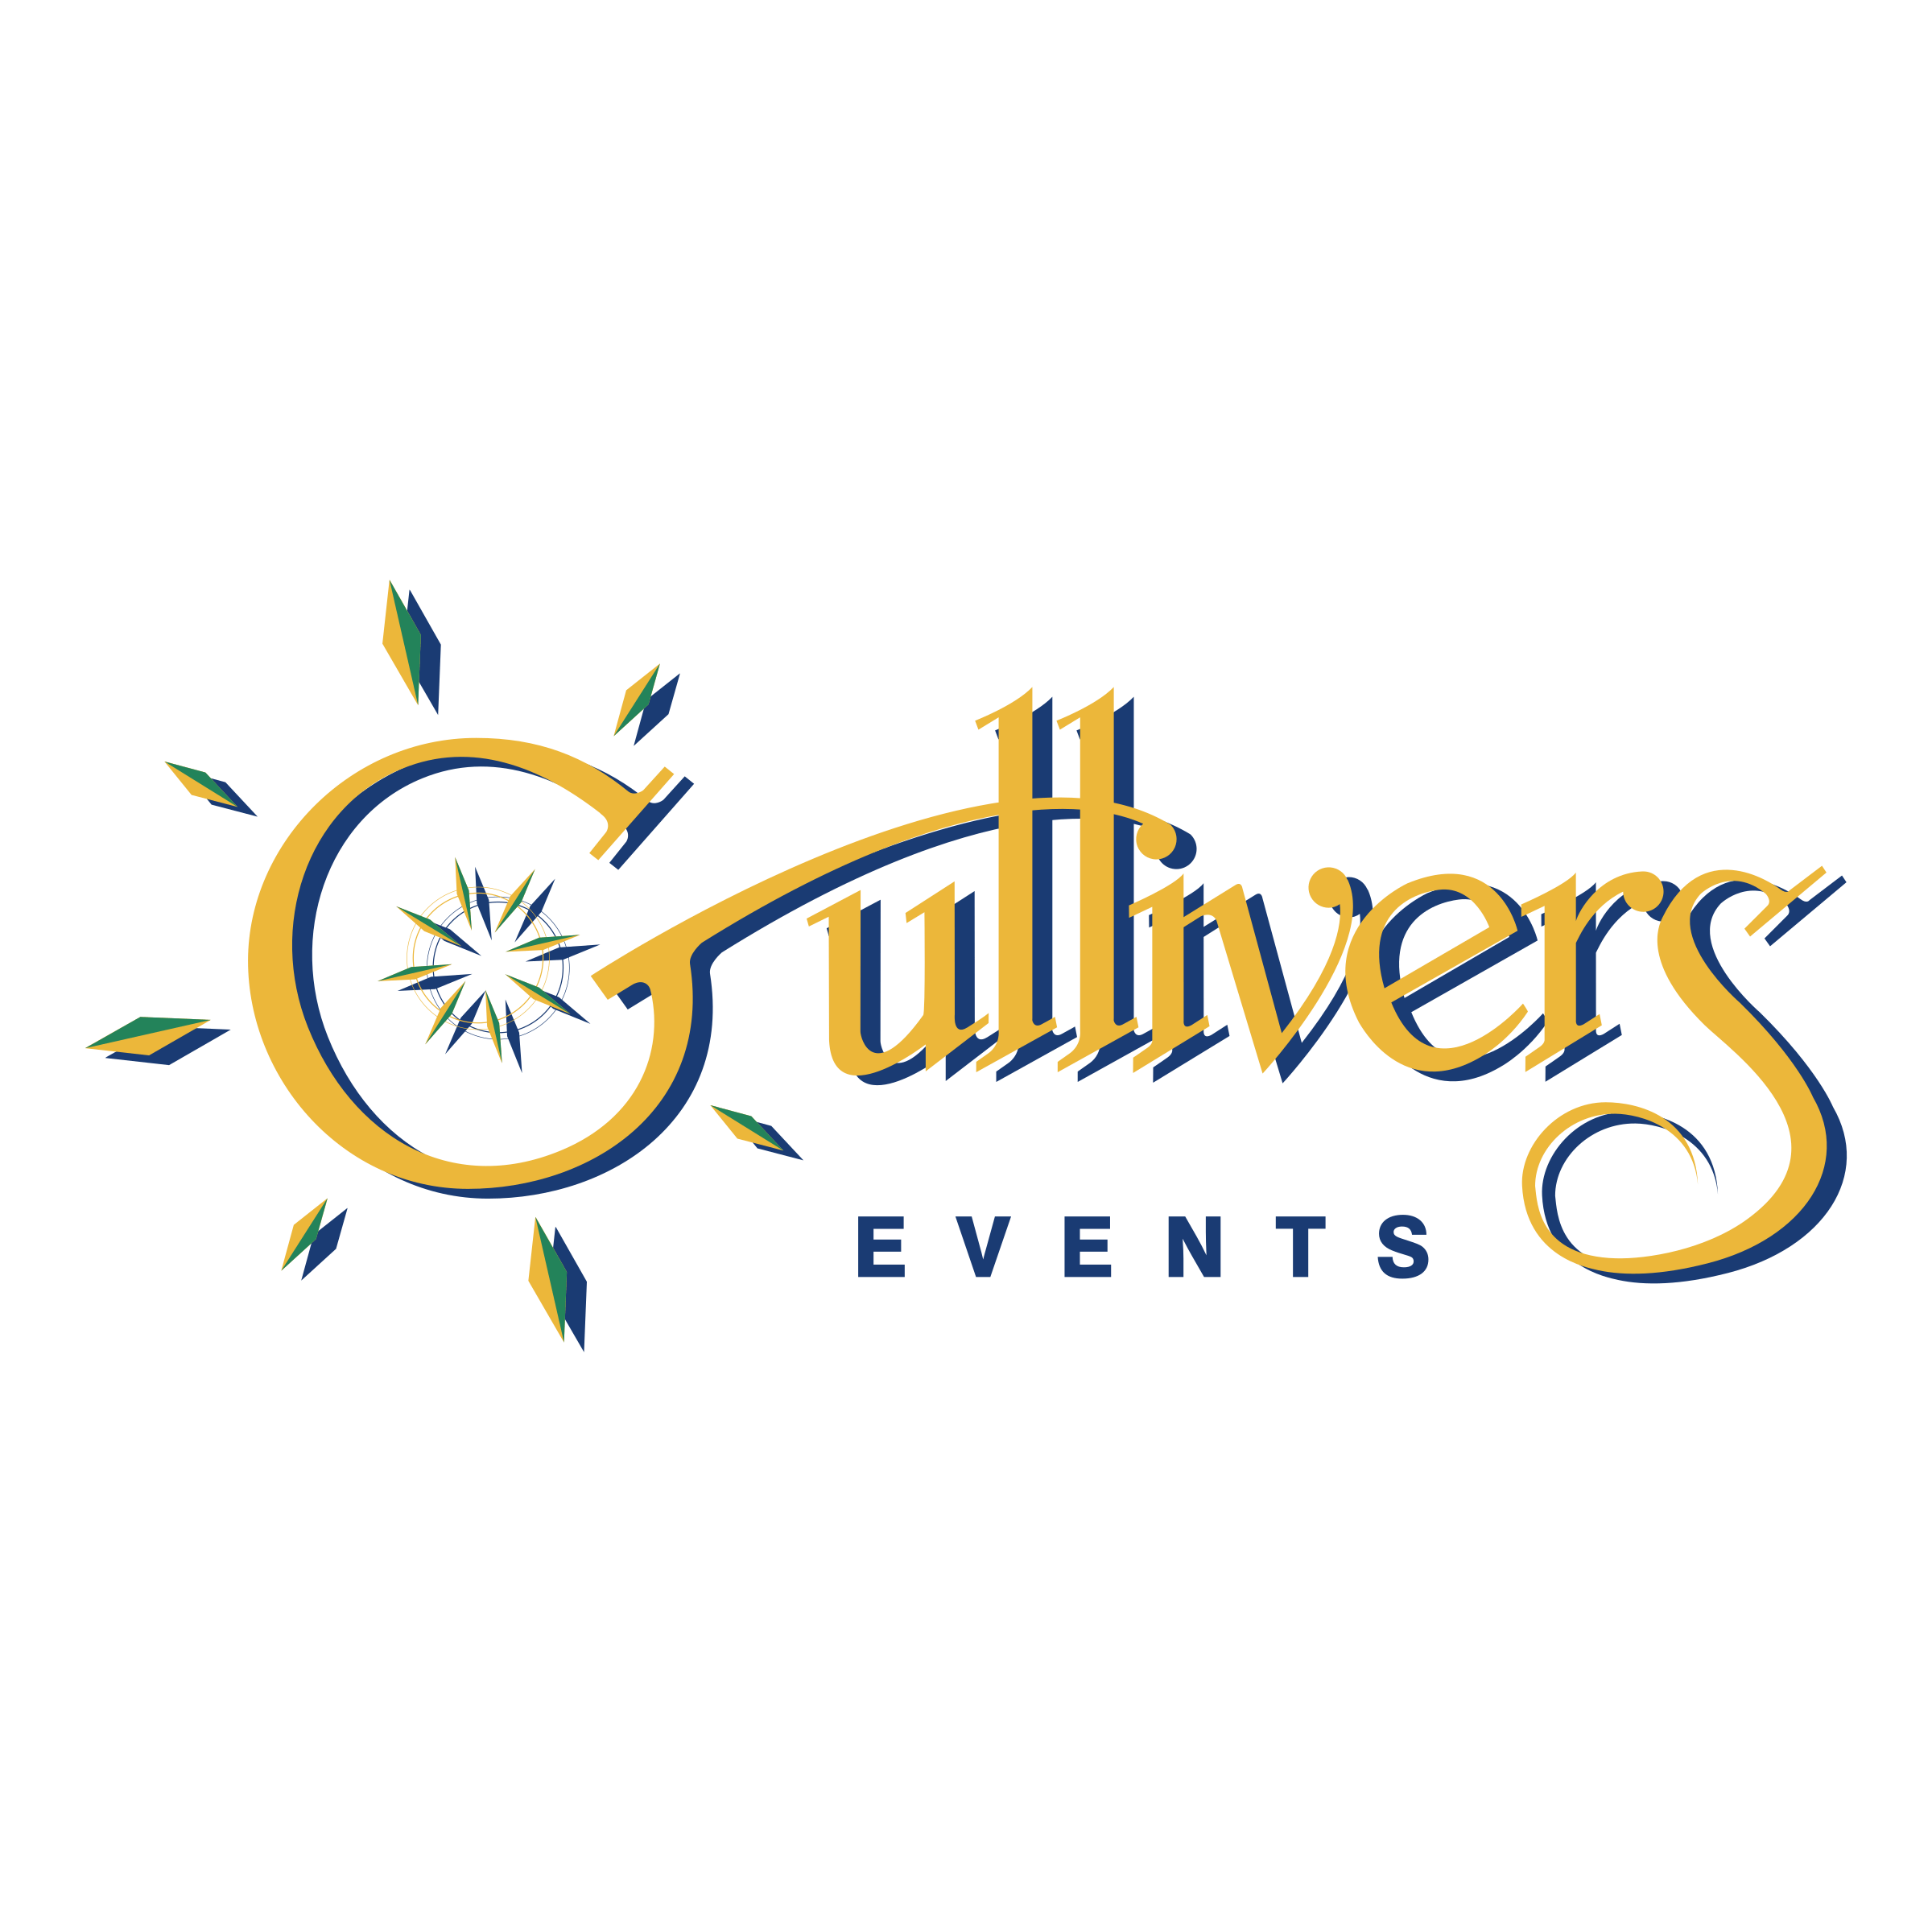 Gulliver's Logo - Gullivers Events Logo PNG Transparent & SVG Vector - Freebie Supply